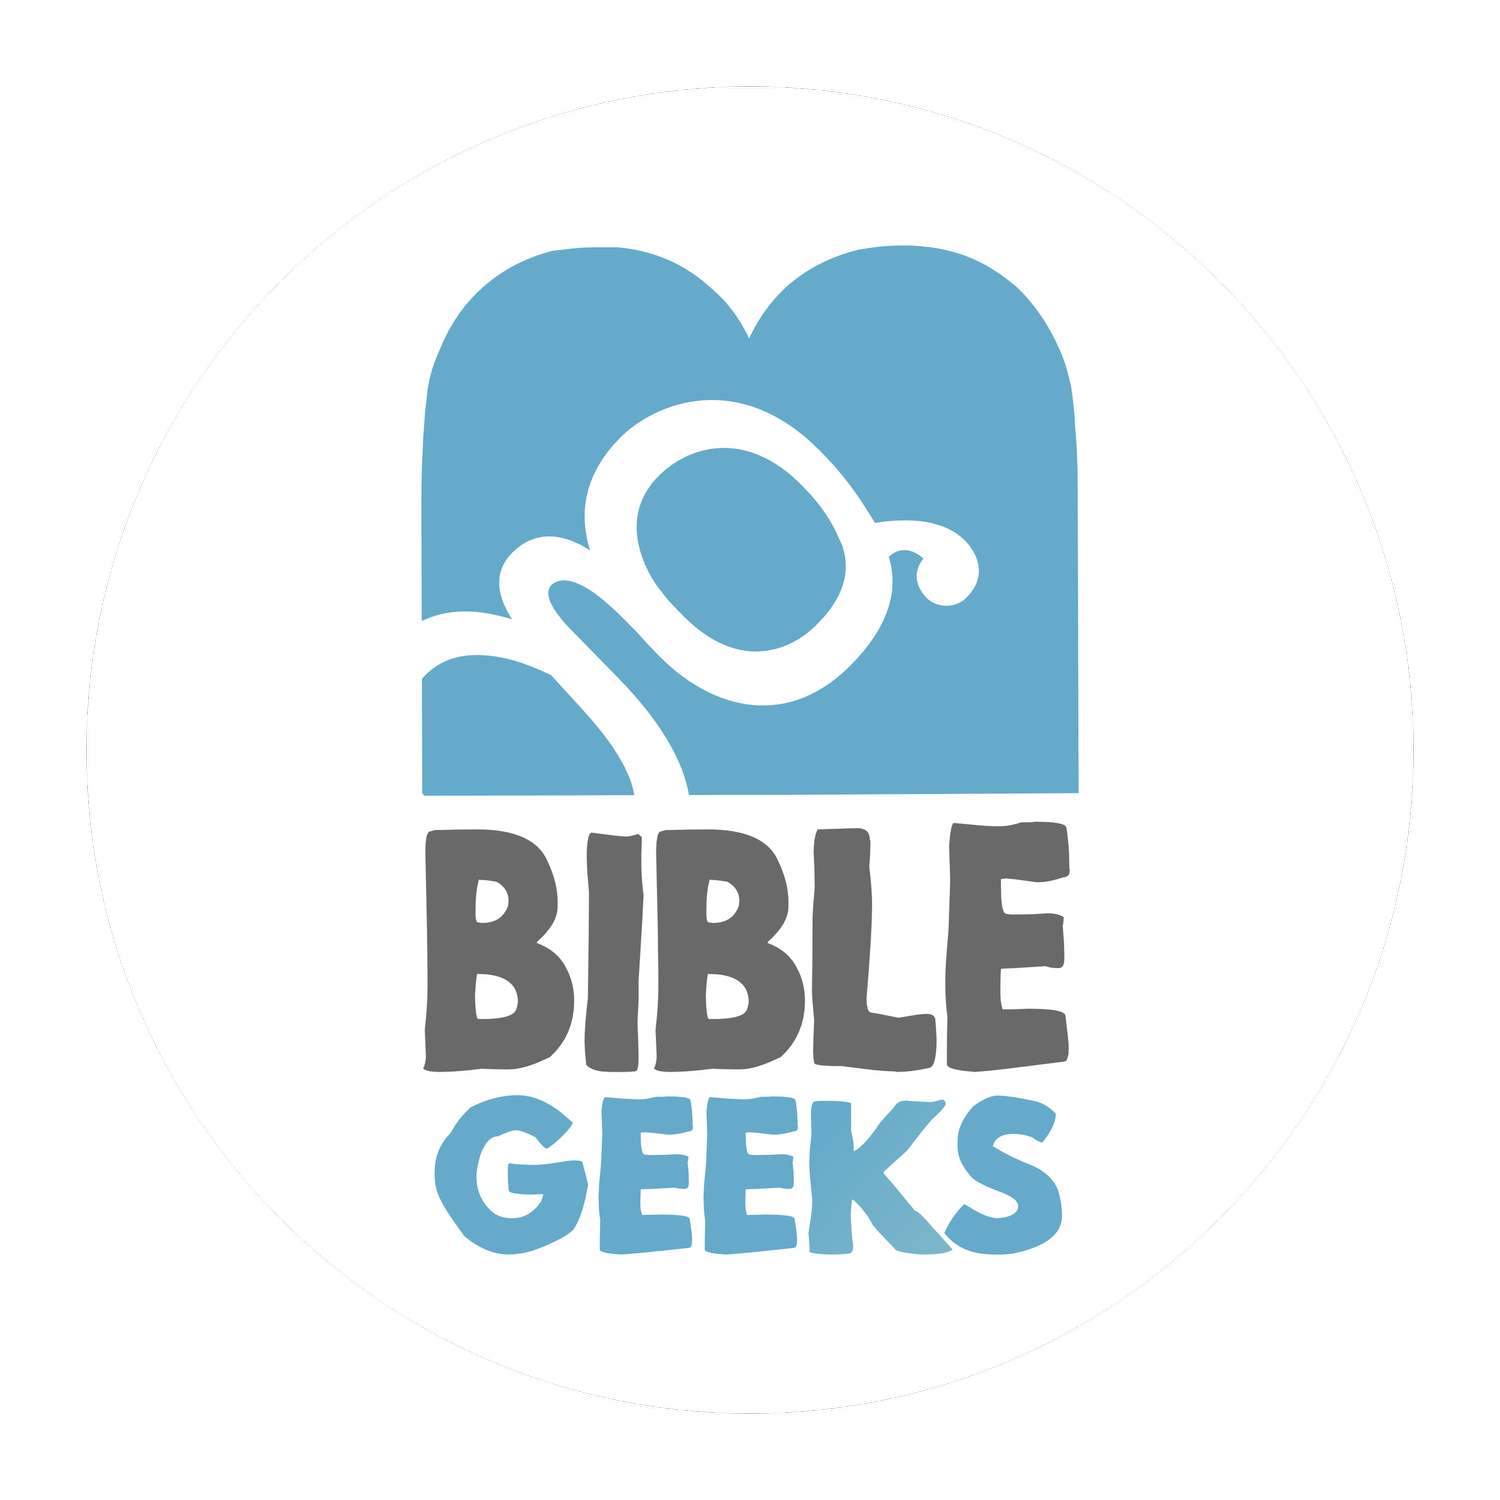 The Bible Geeks